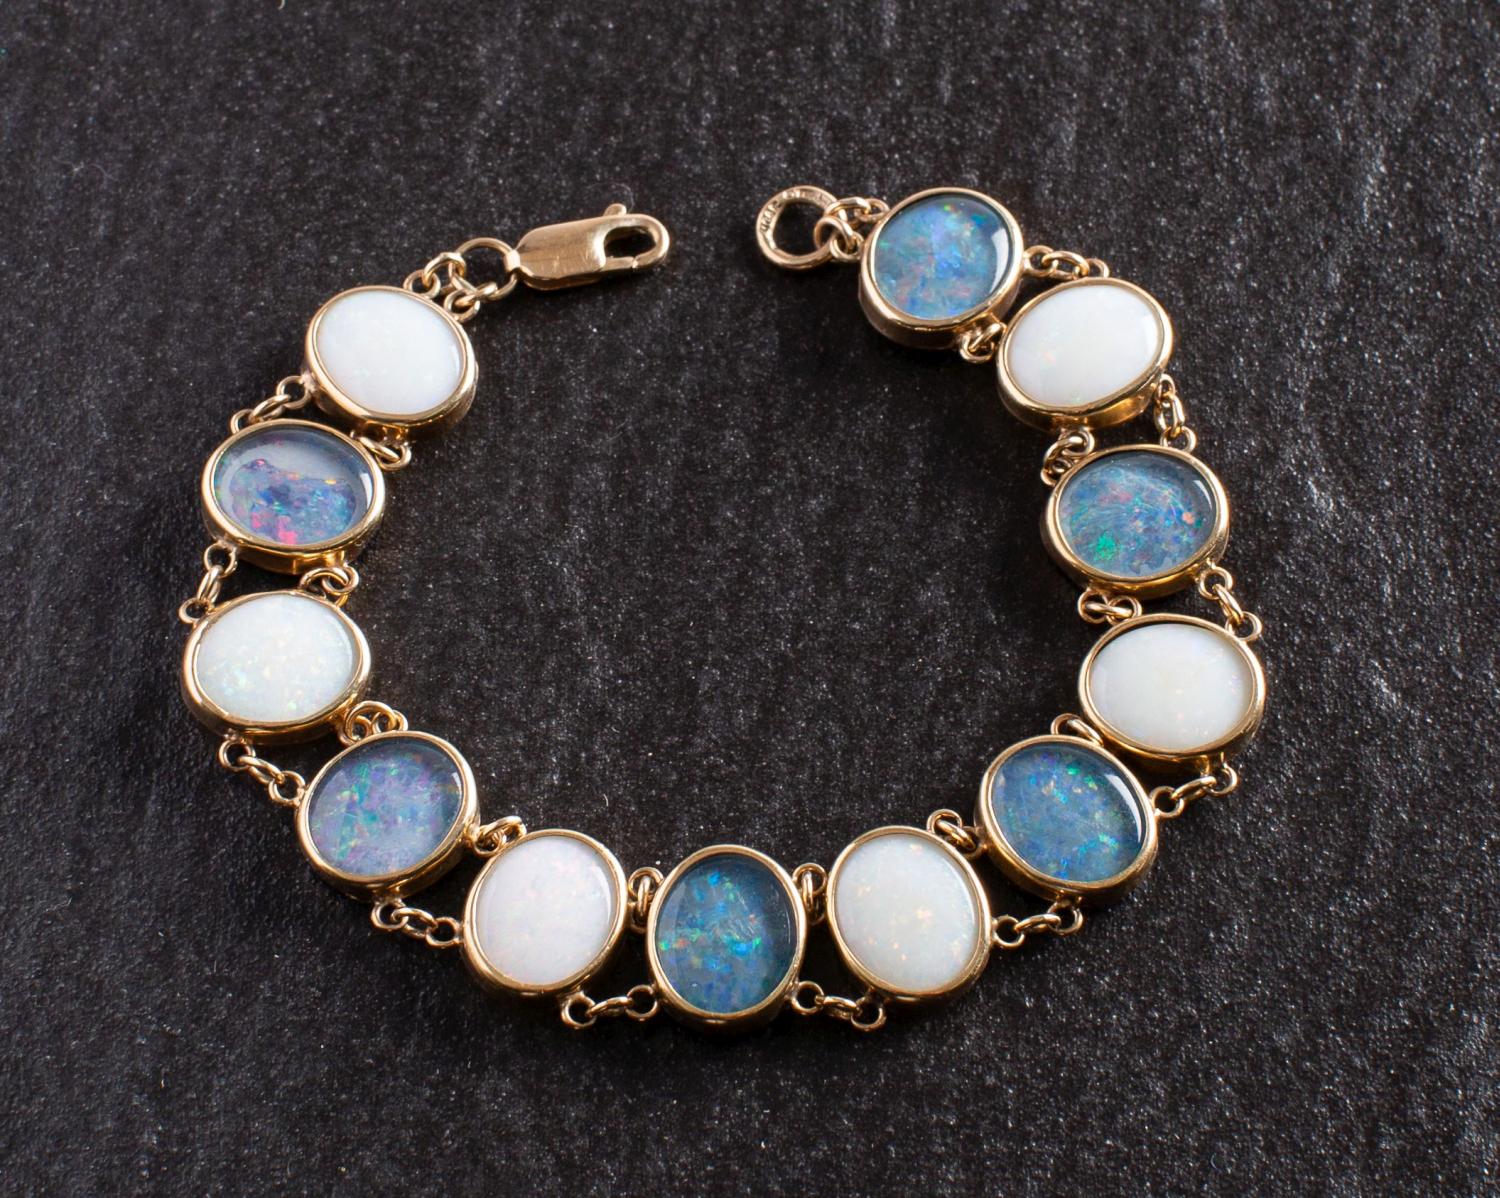 A 9ct gold, oval, cabochon-cut white opal and black opal triplet bracelet,